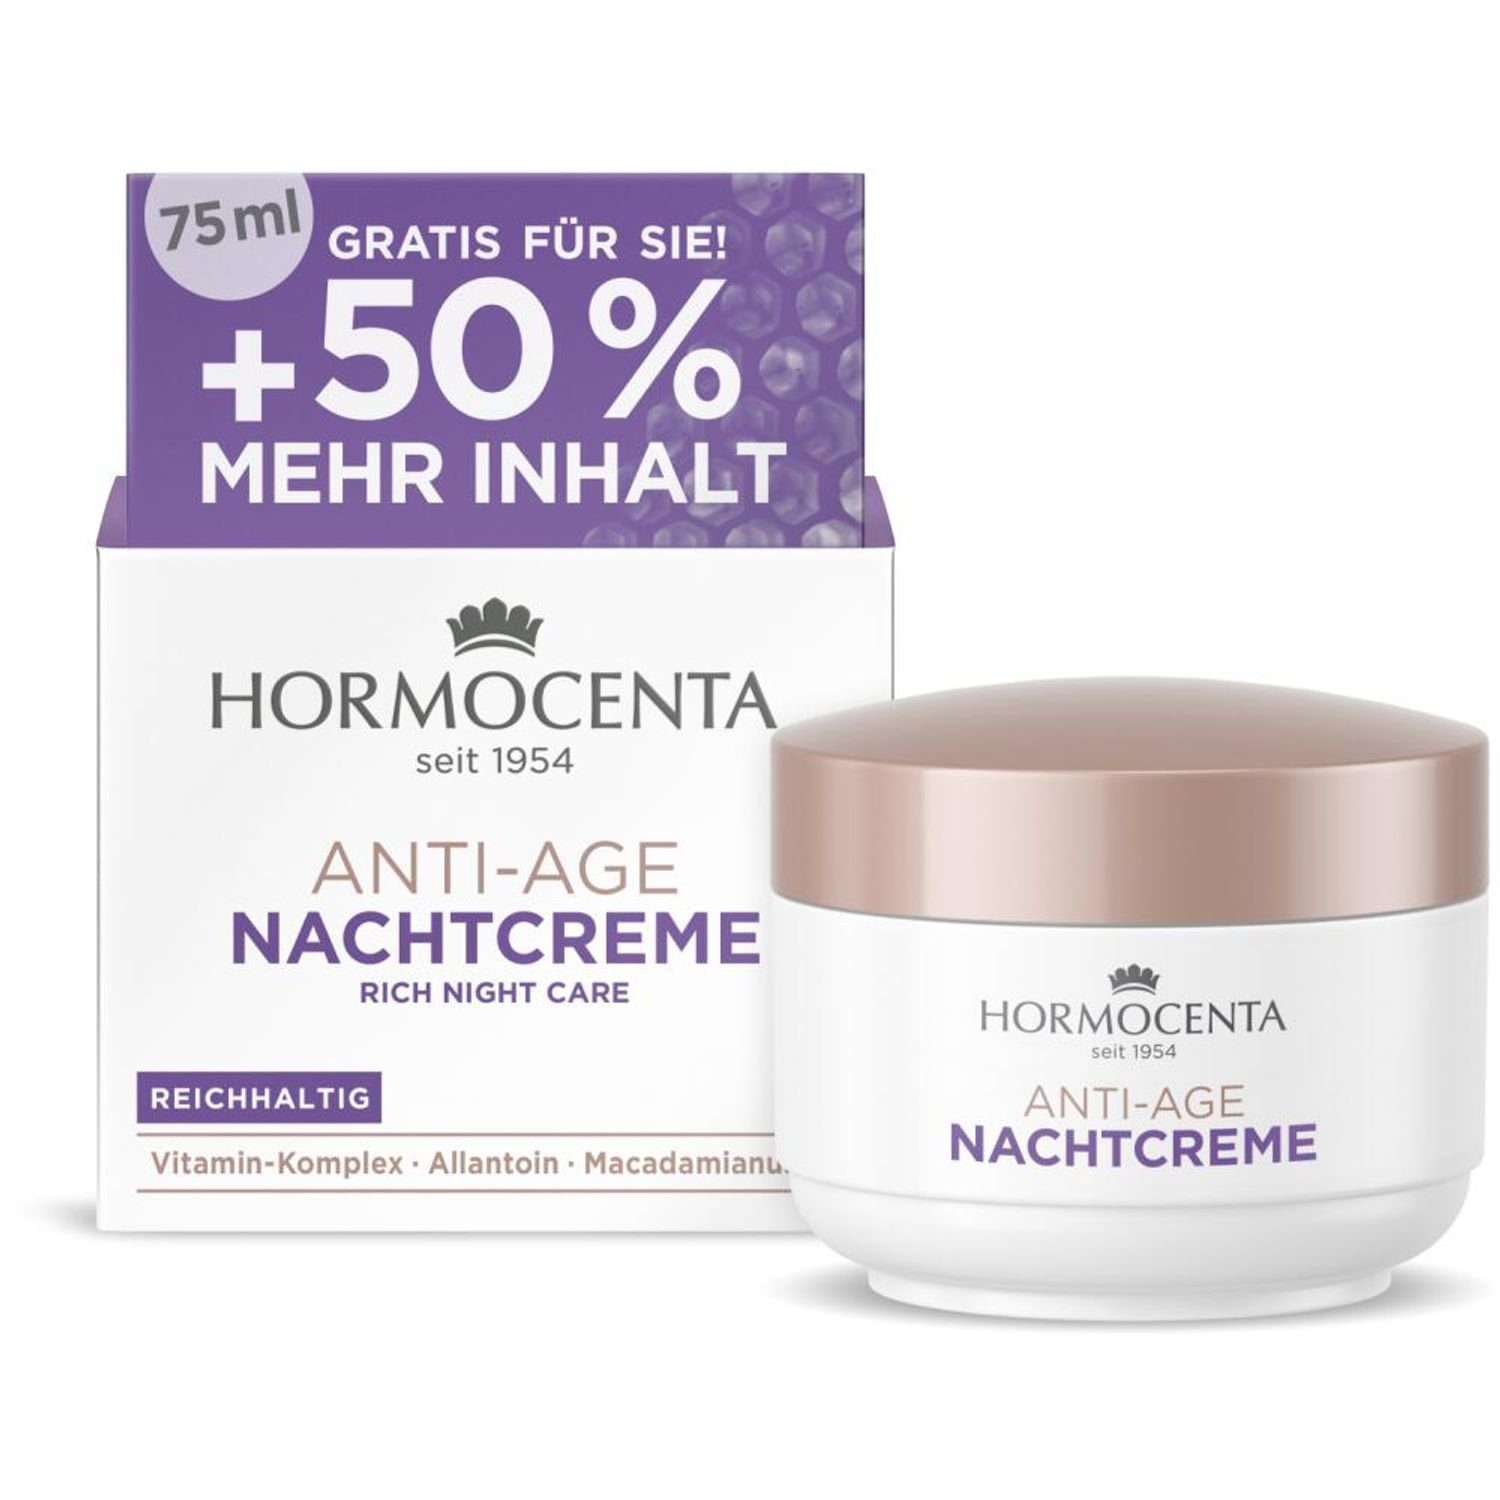 Hormocenta Kosmetik 6x Haut Gesicht GmbH Pflege Nachtcreme Anti Bals Lotion 75ml Körpercreme Age Hormocenta